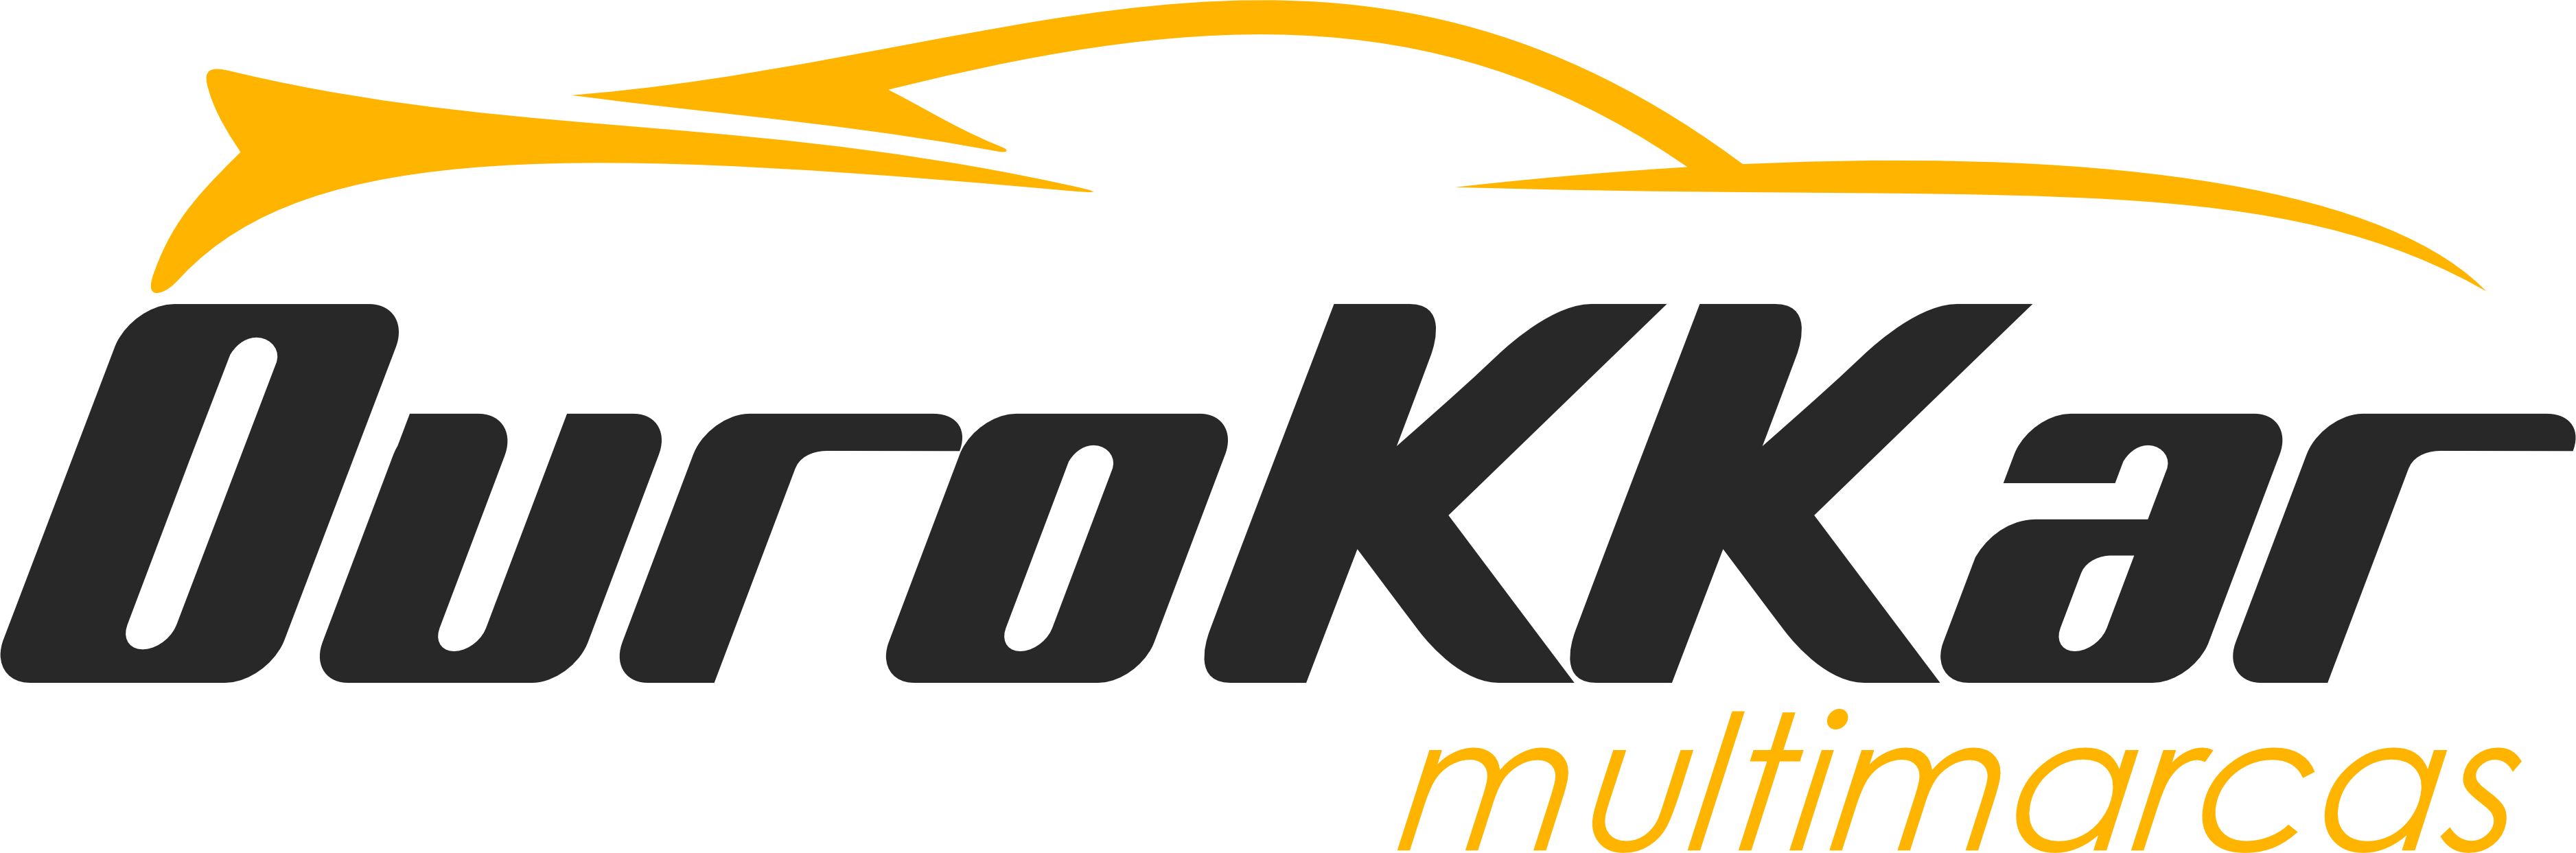 Logo Ourokkar